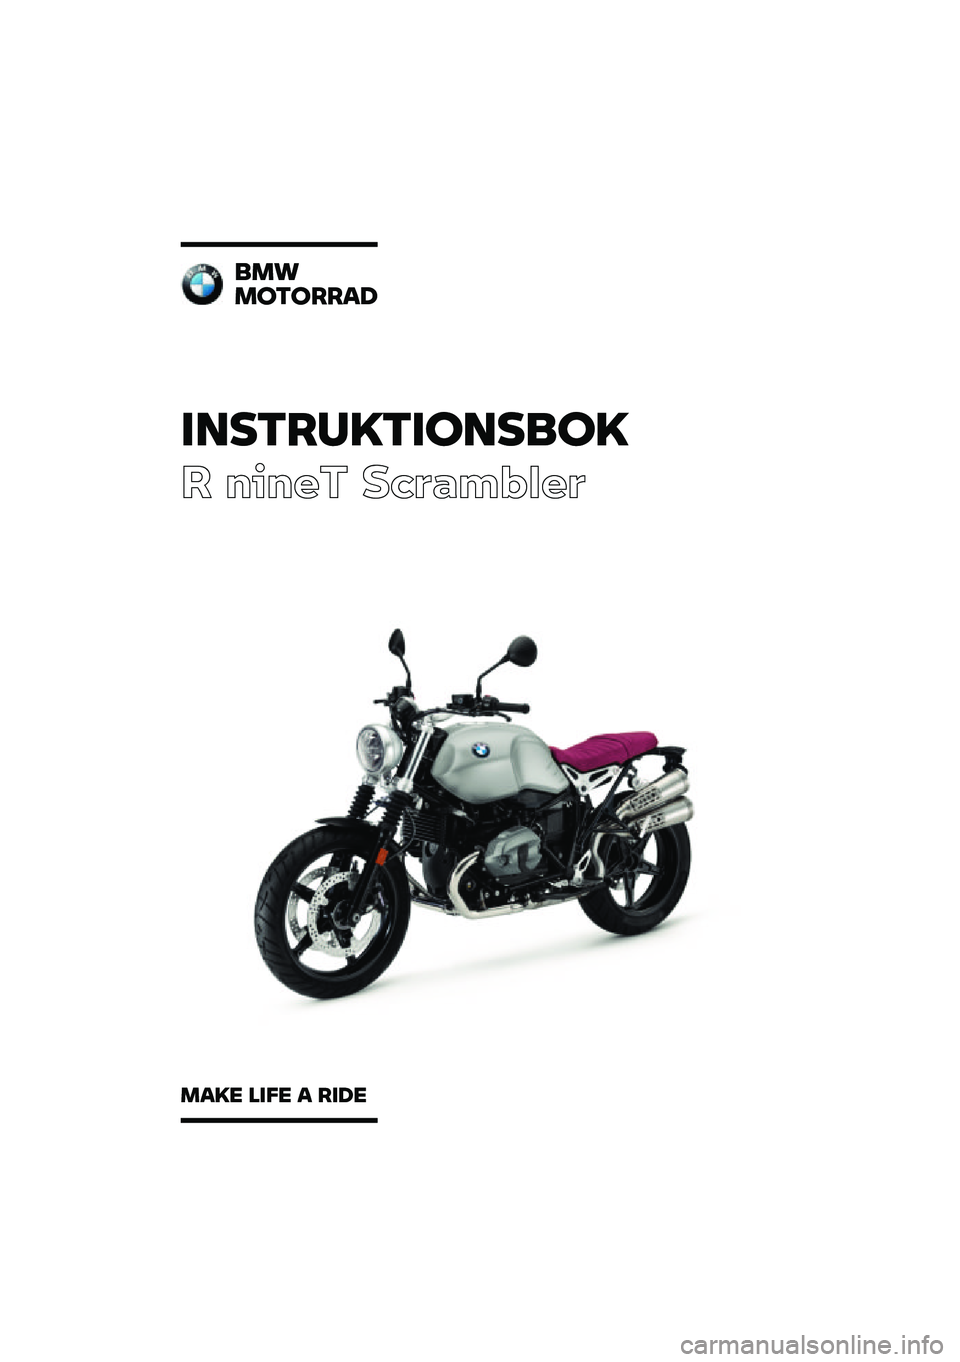 BMW MOTORRAD R NINE T SCRAMBLER 2020  Instruktionsbok (in Swedish) �������\b���	���
�	�\b
� ����� ��\b�	�
��\f�
��	
�
��\f
��	��	���
�
��
�\b� ���� �
 ���� 